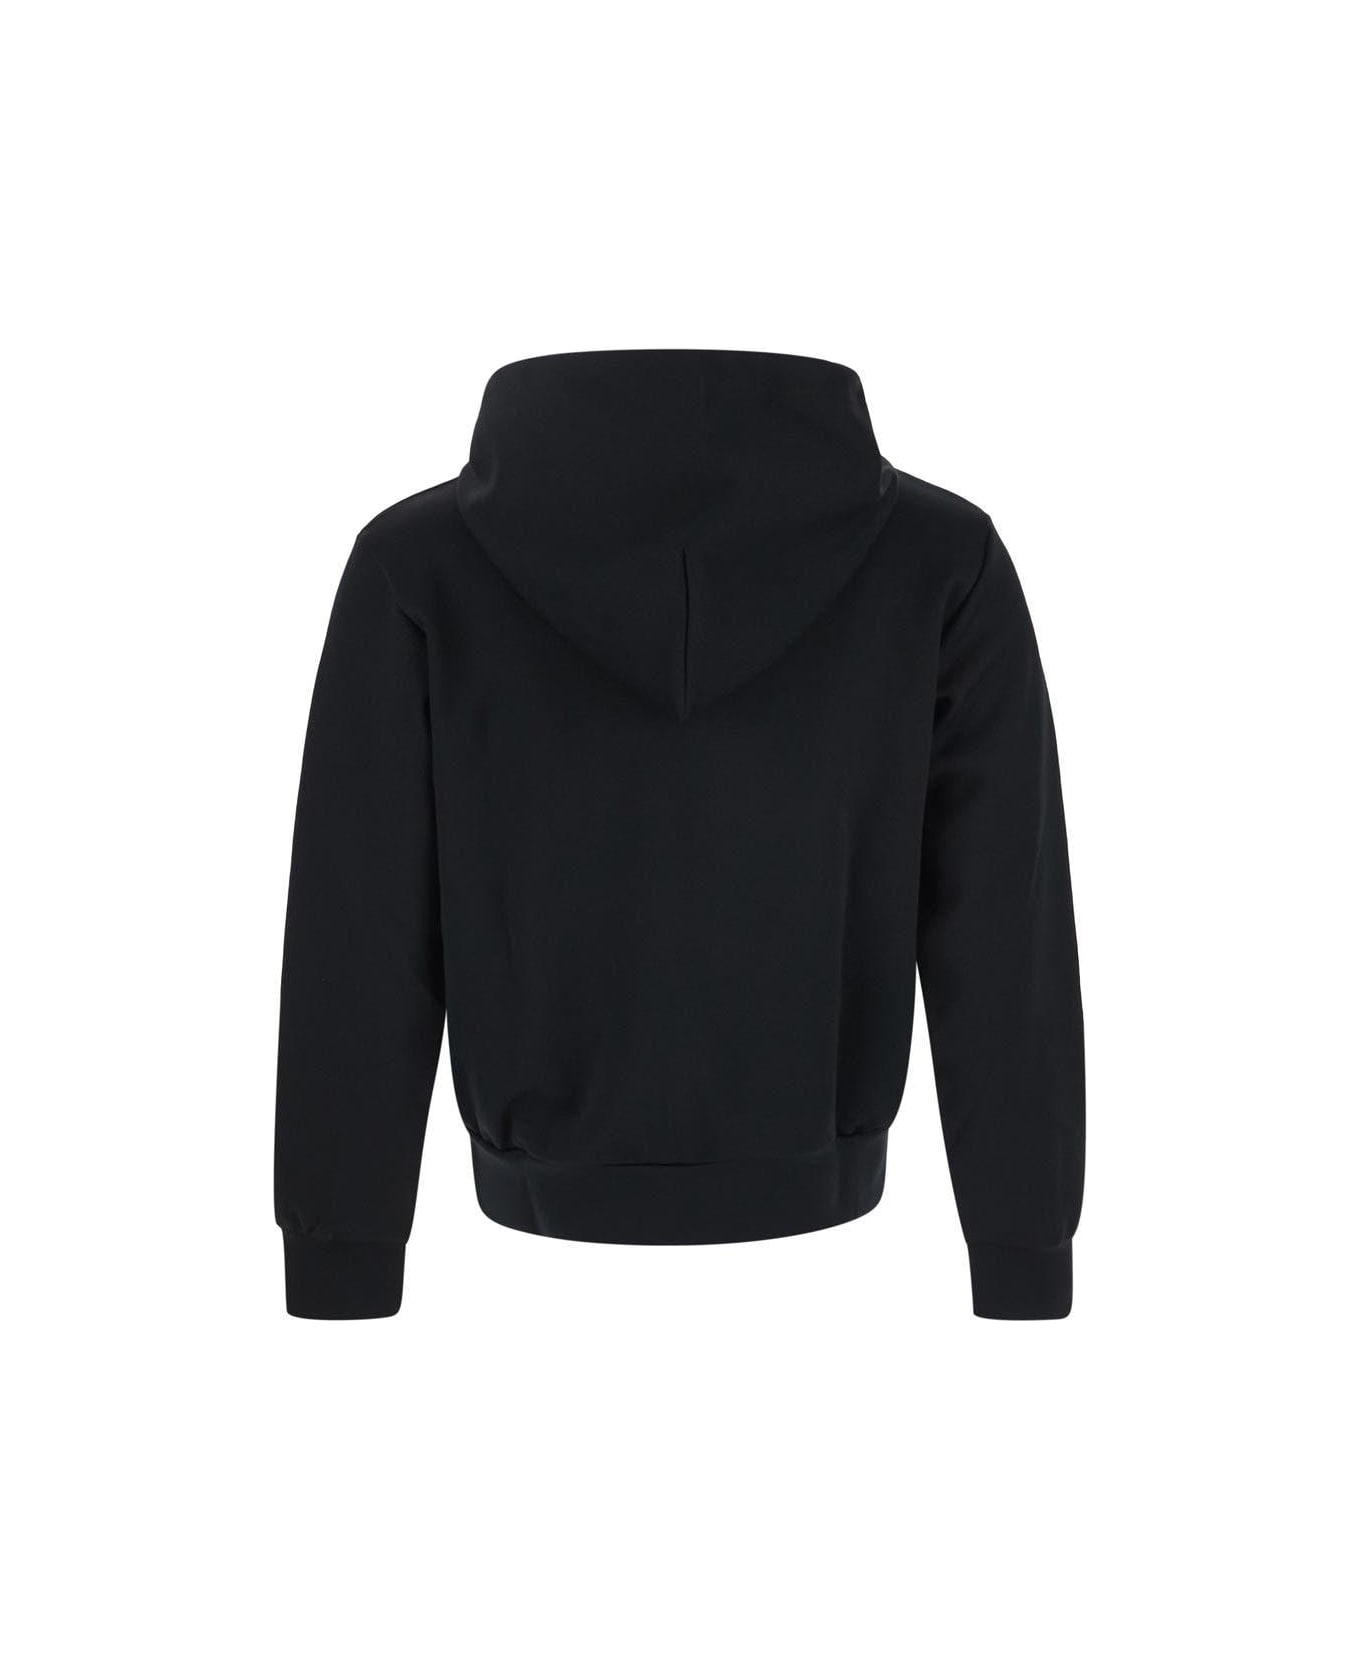 Comme des Garçons Play Zipped Sweatshirt - Black